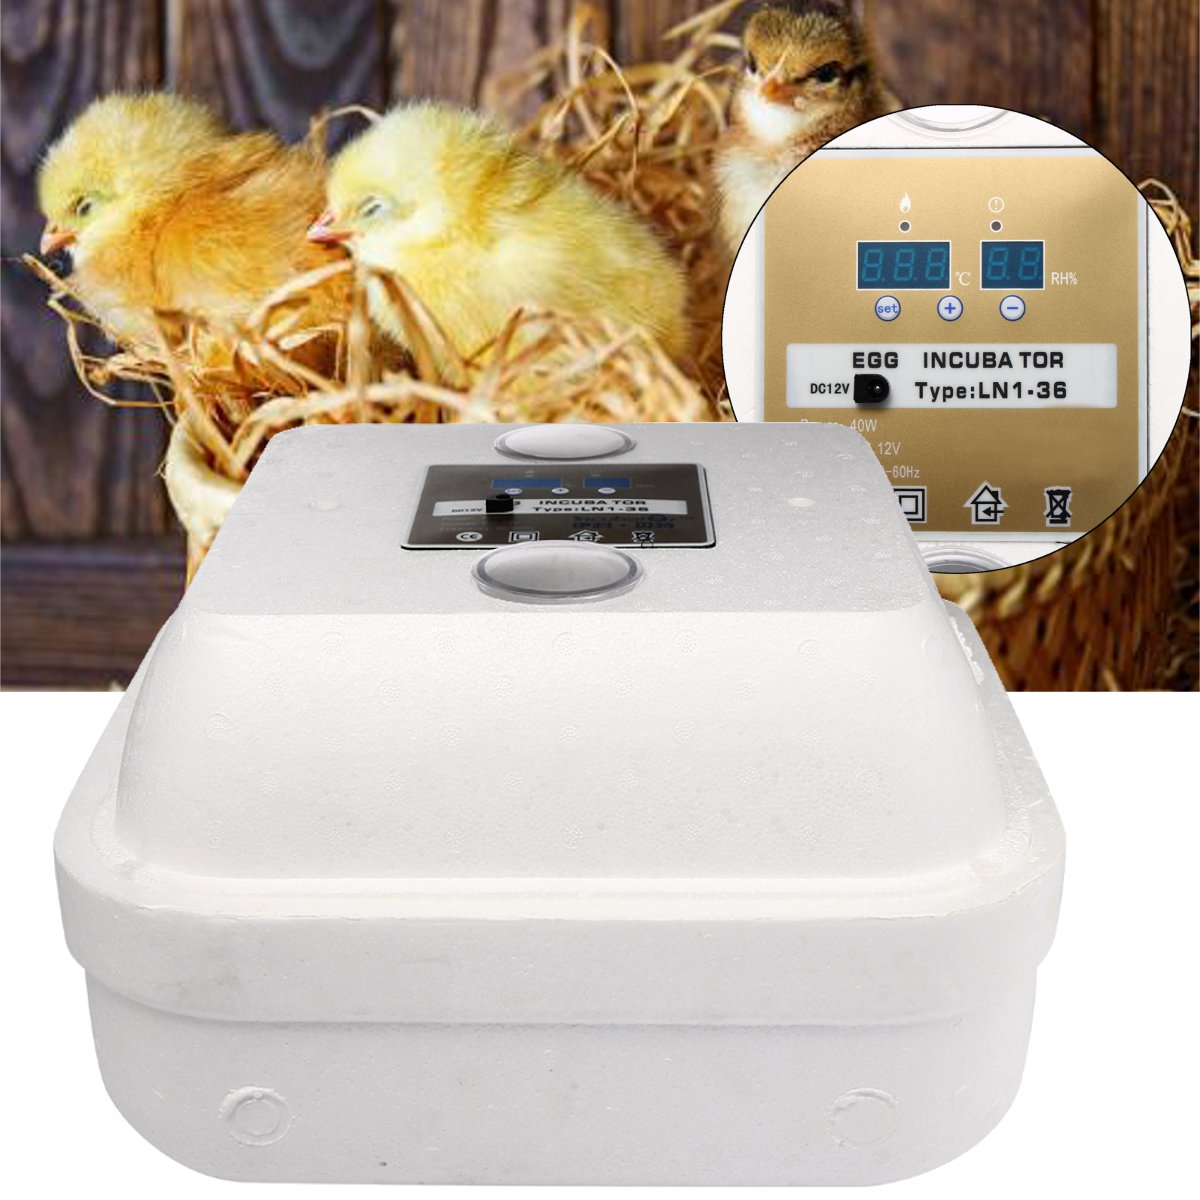 36-Eggs-Foam-Family-Incubator-Digital-Chicken-Duck-Poultry-Hatcher-Tray-Egg-Incubator-Tool-1275381-1